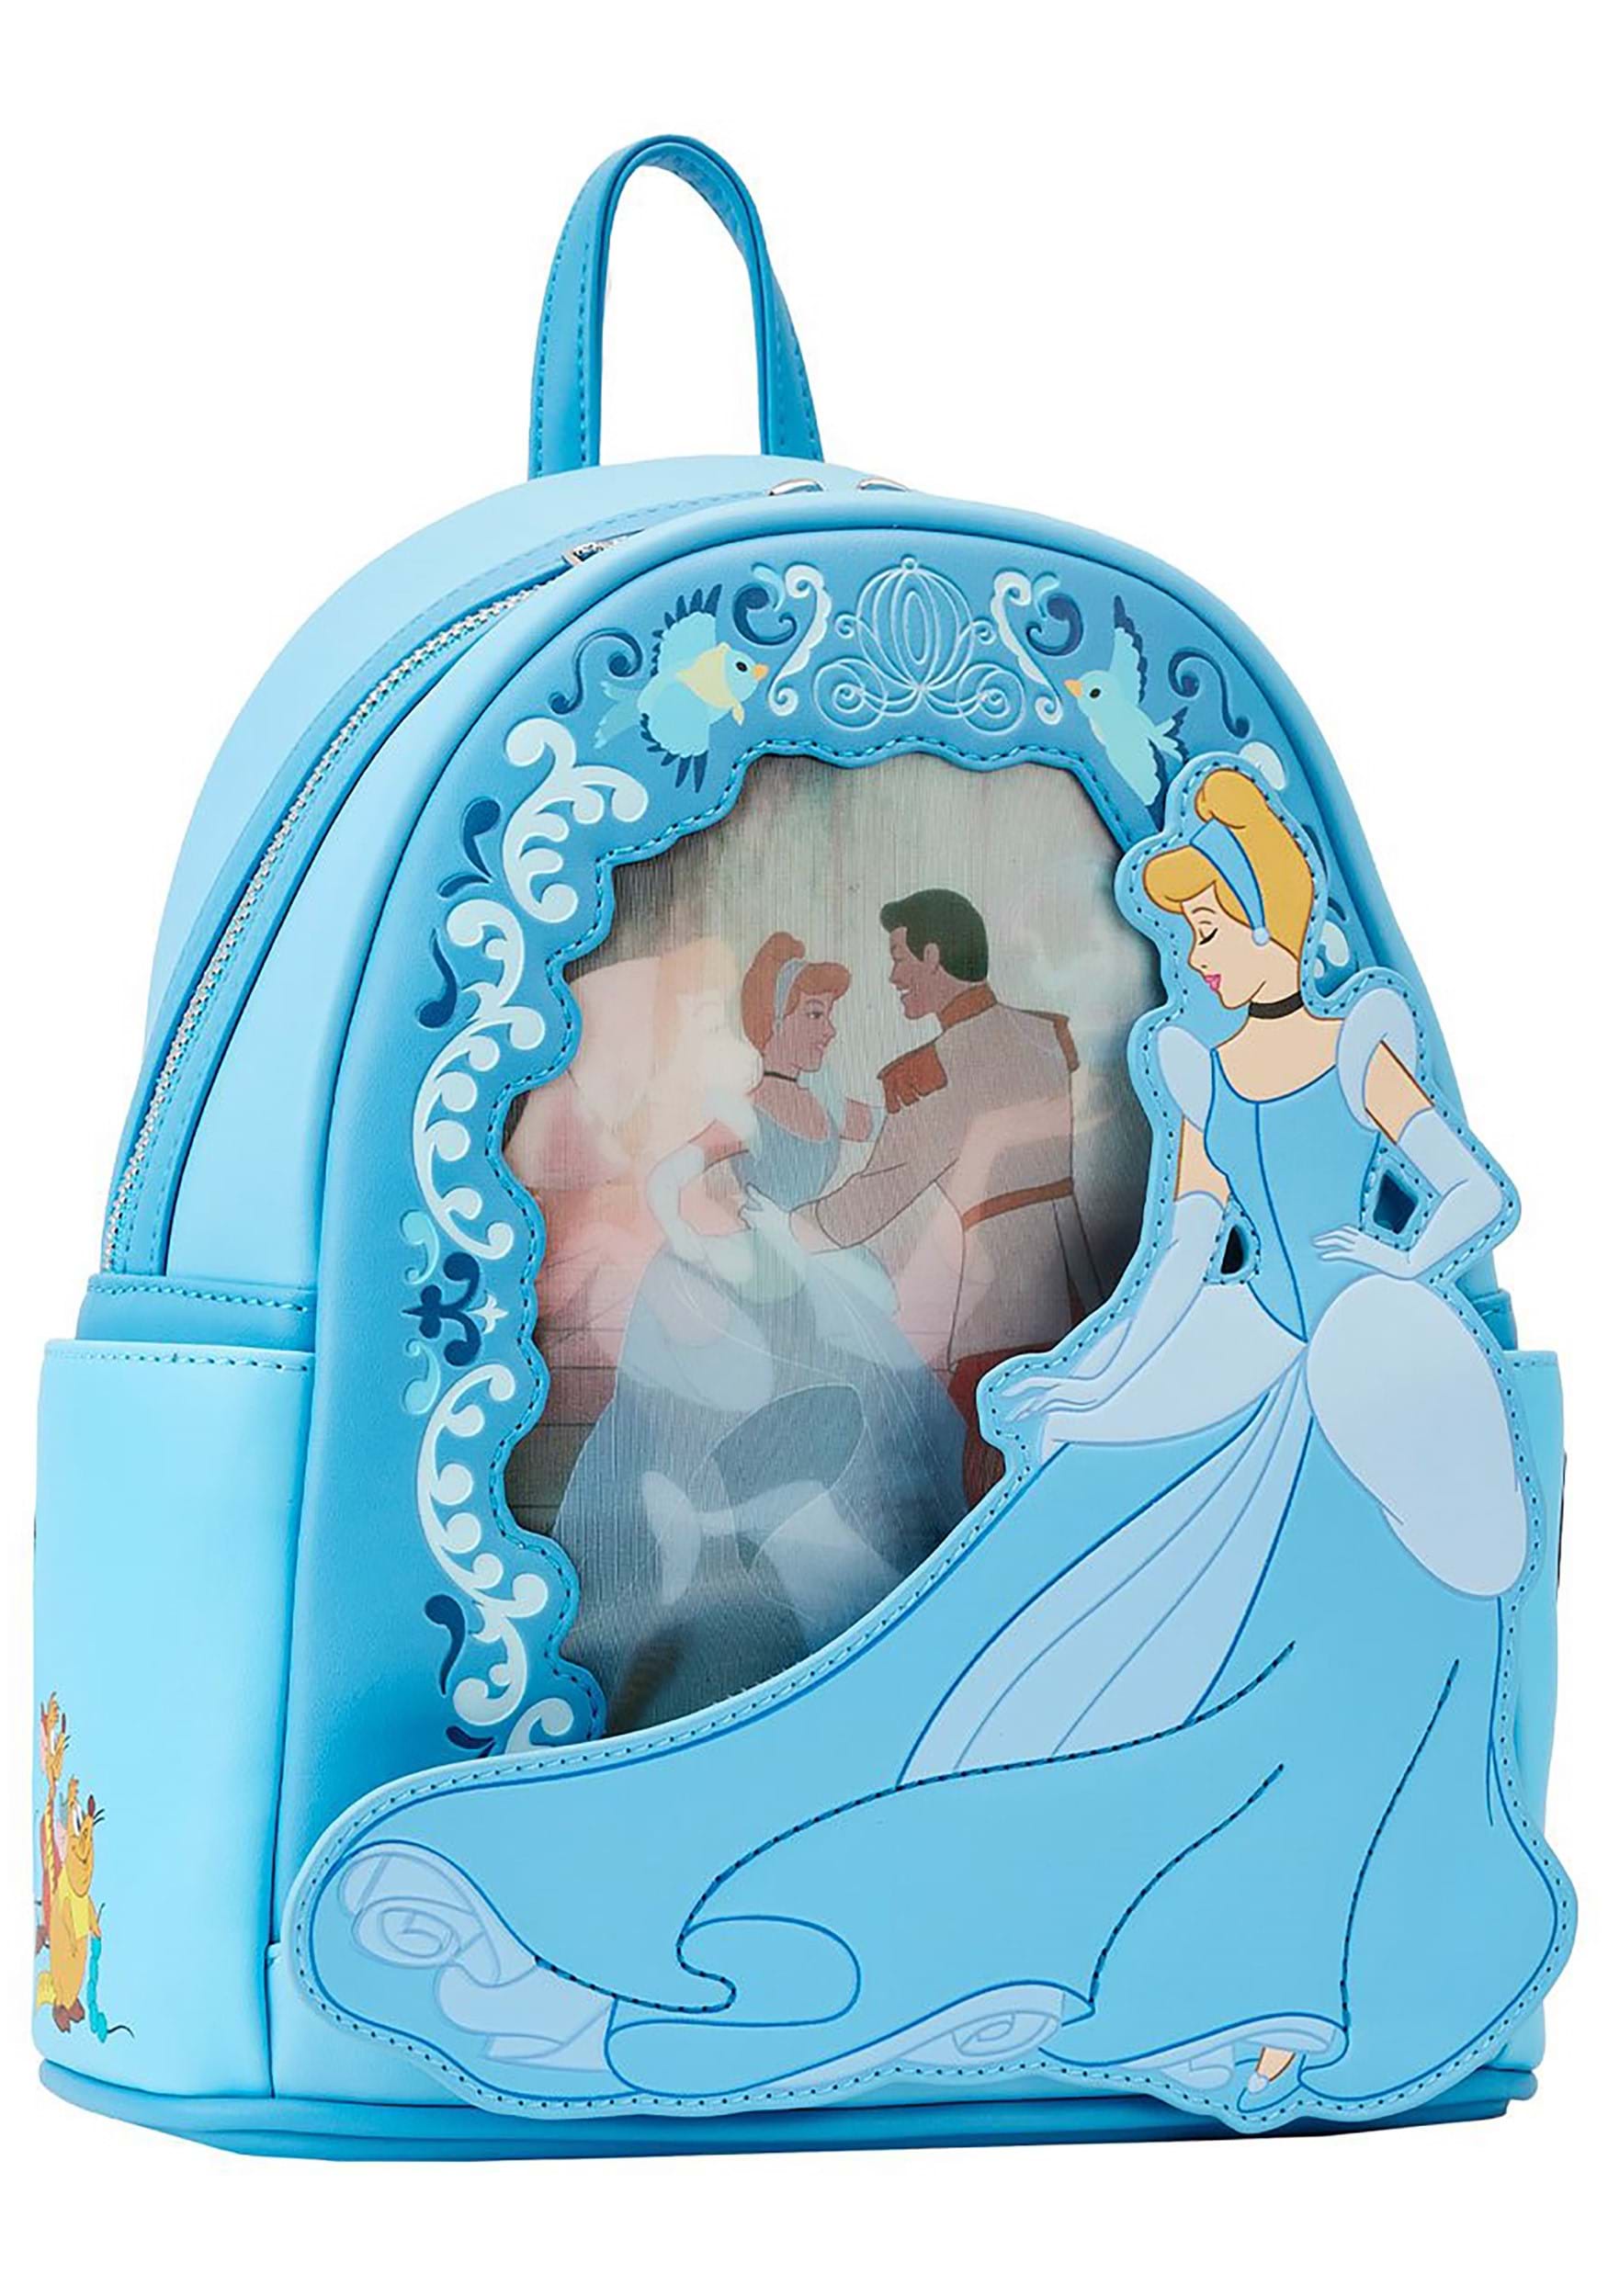 First Look: Sleeping Beauty Princess Lenticular Mini Backpack